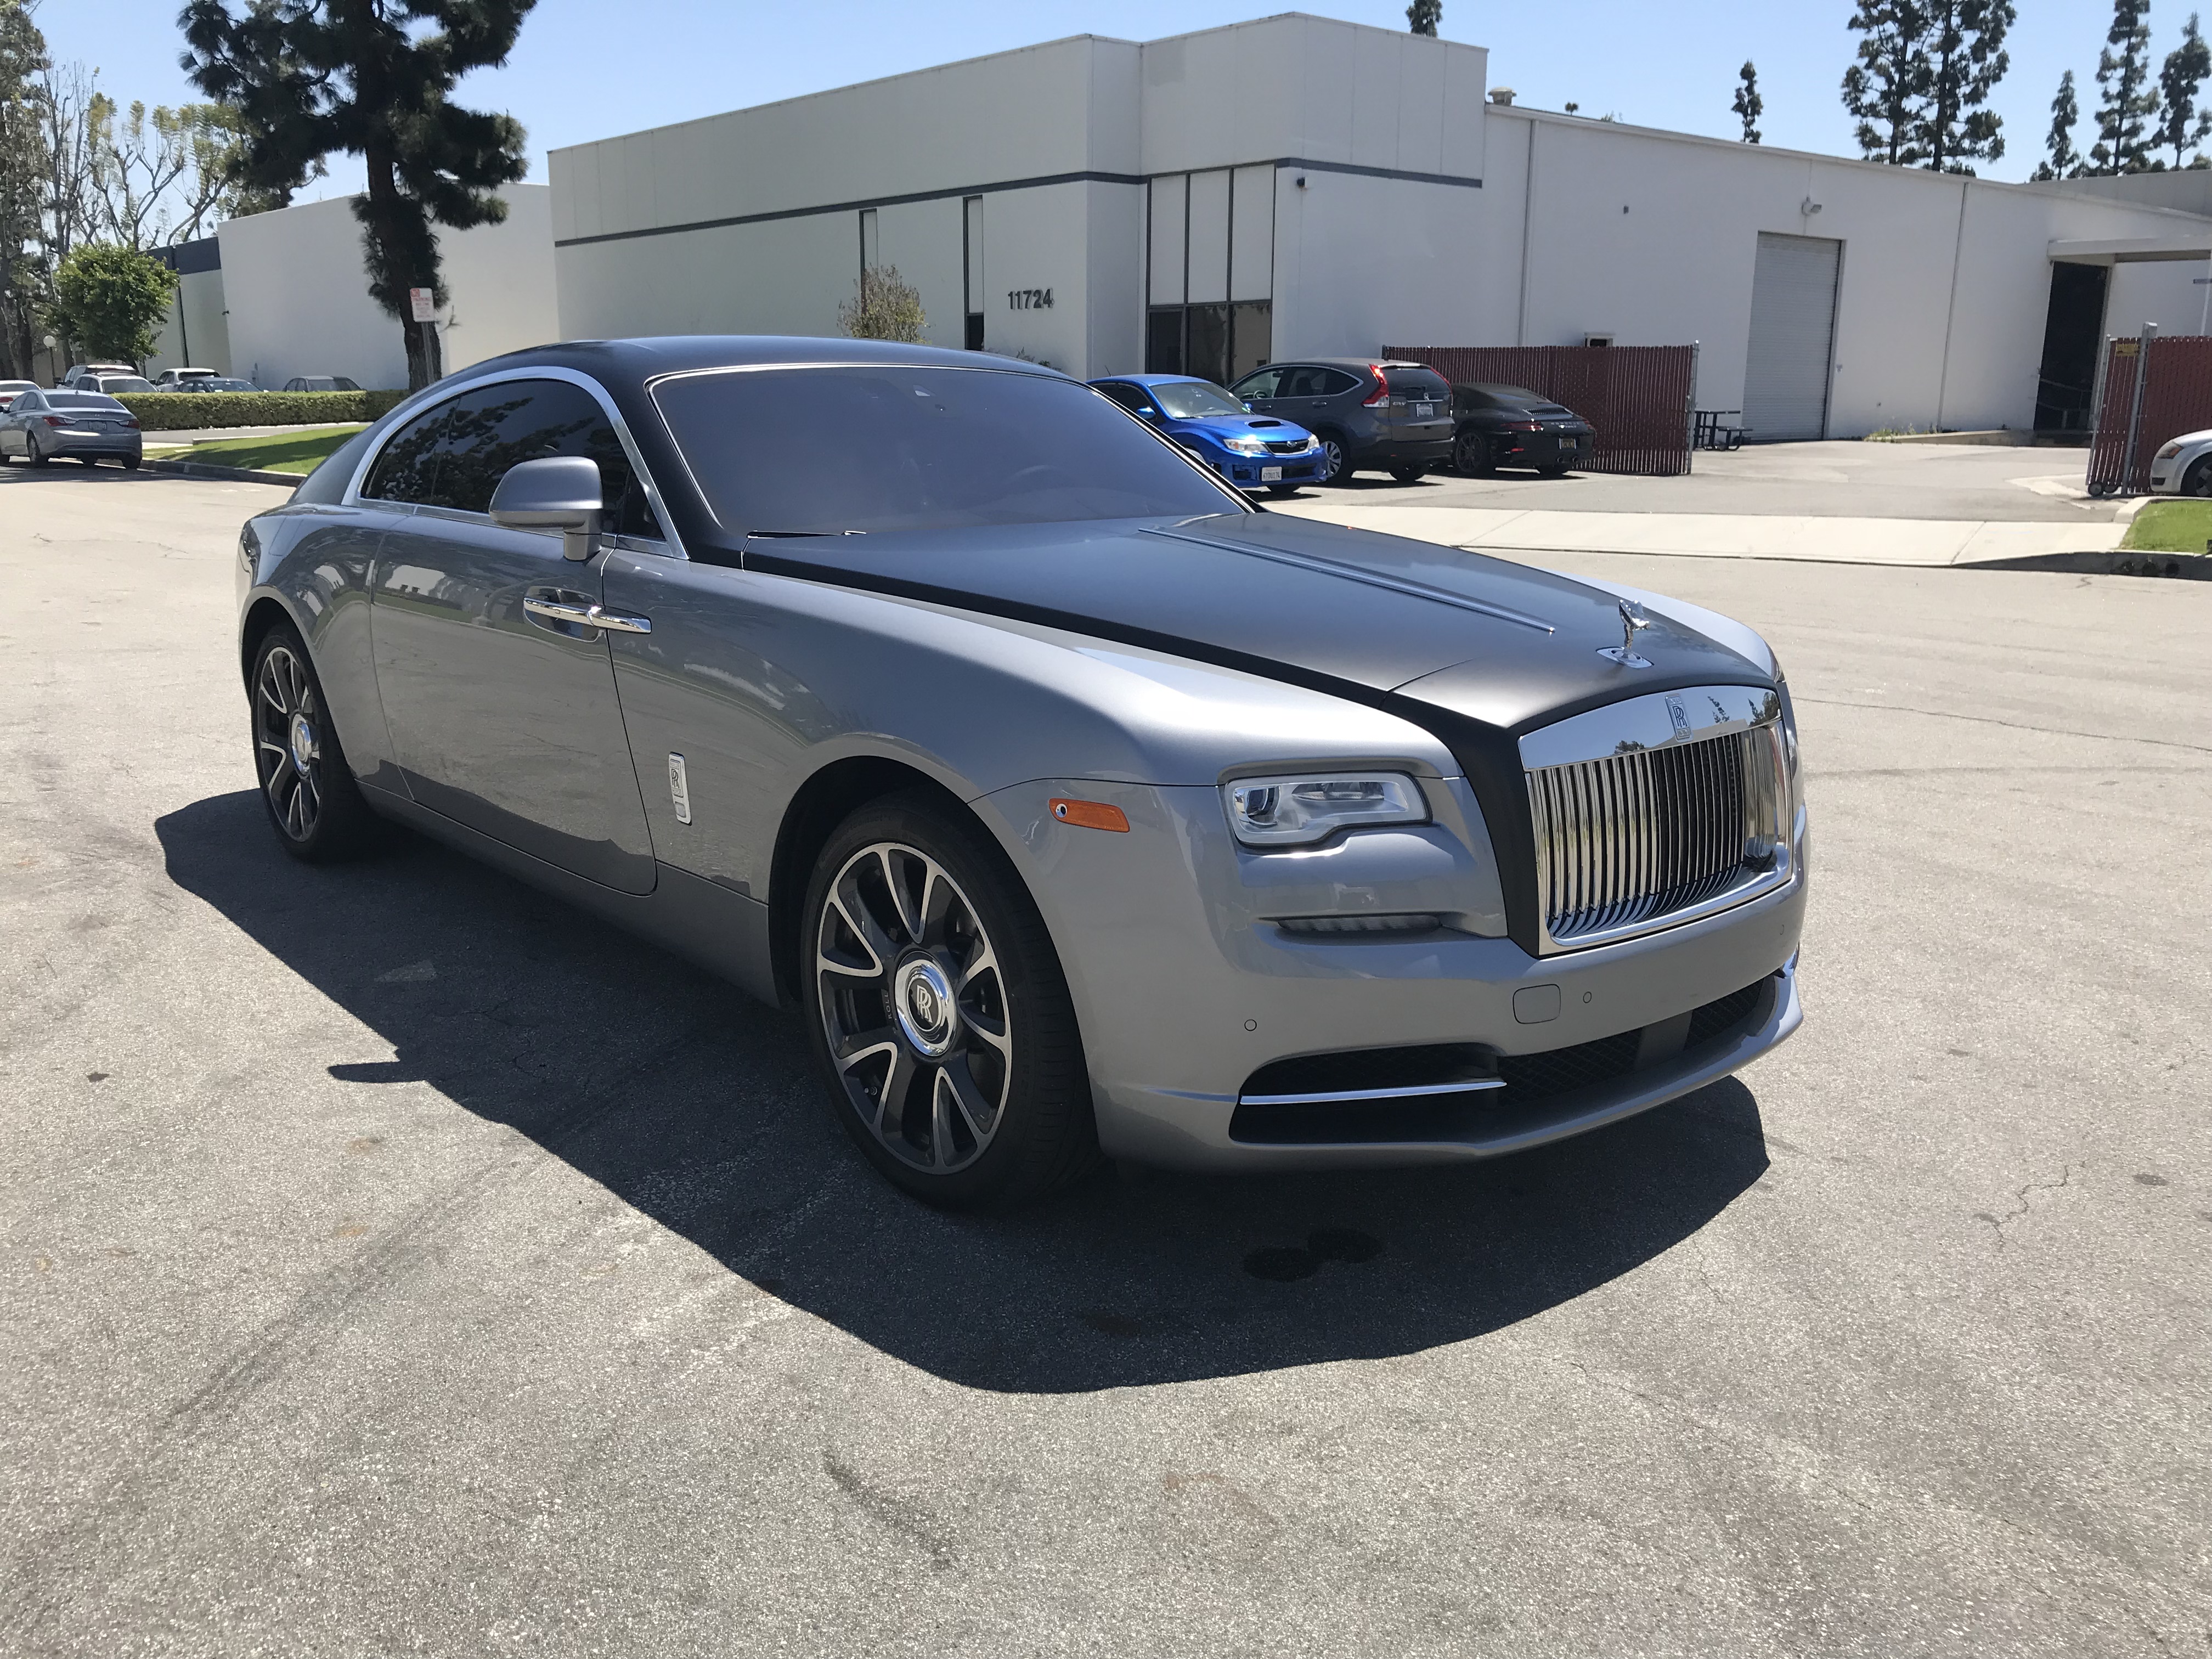 Opulent Harmony: Rolls Royce Wraith Awakens in Two-Tone Elegance